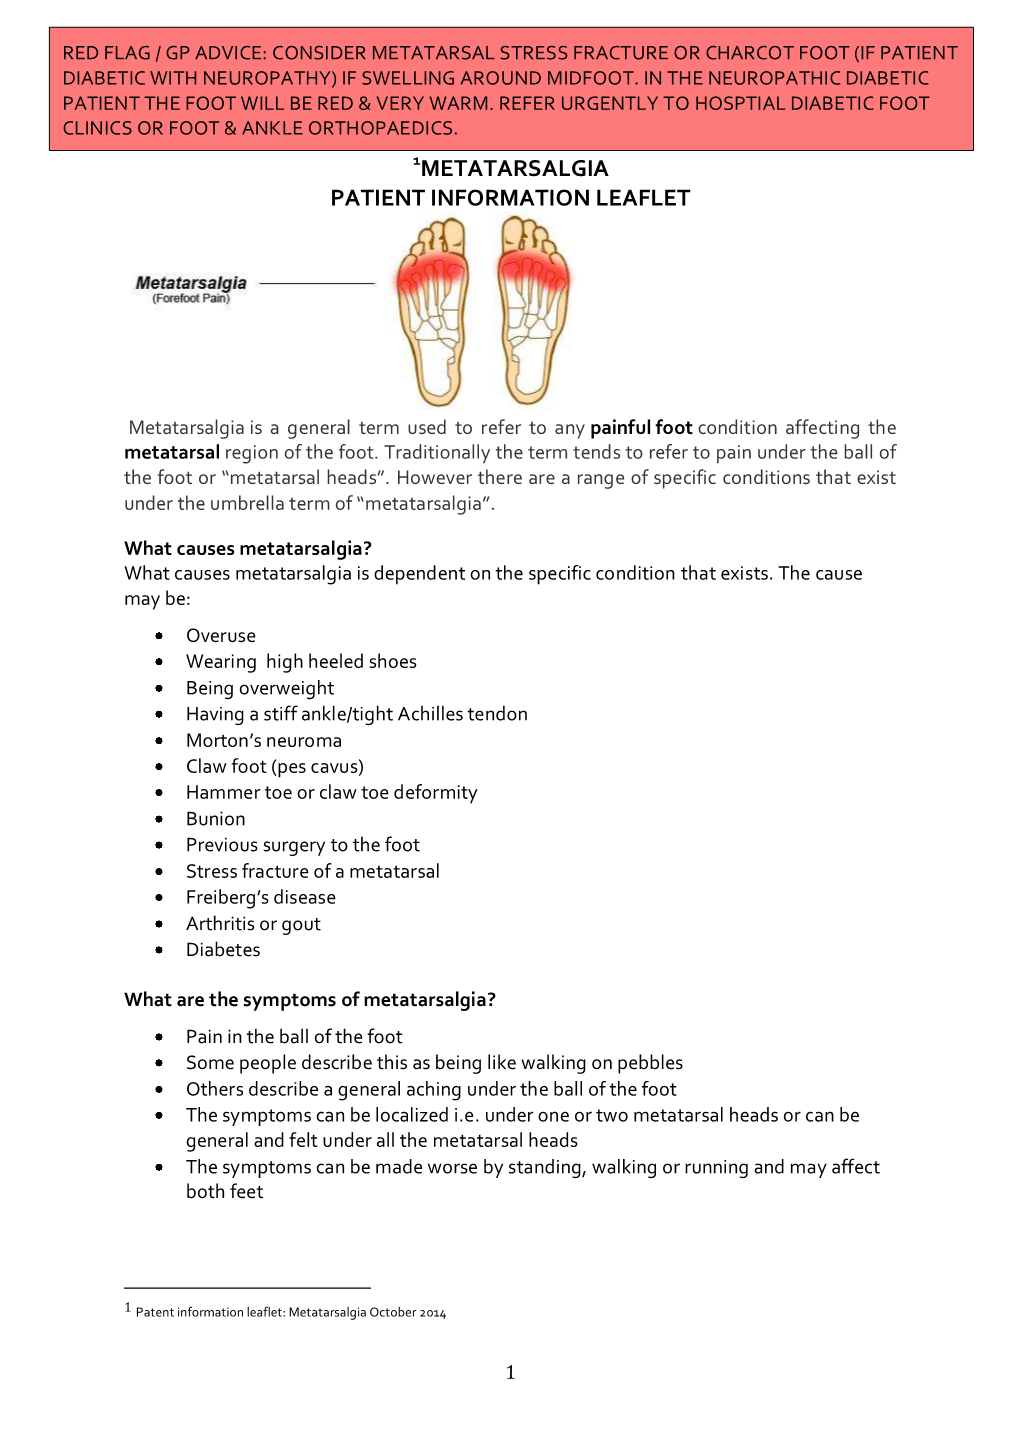 Metatarsalgia Patient Information Leaflet